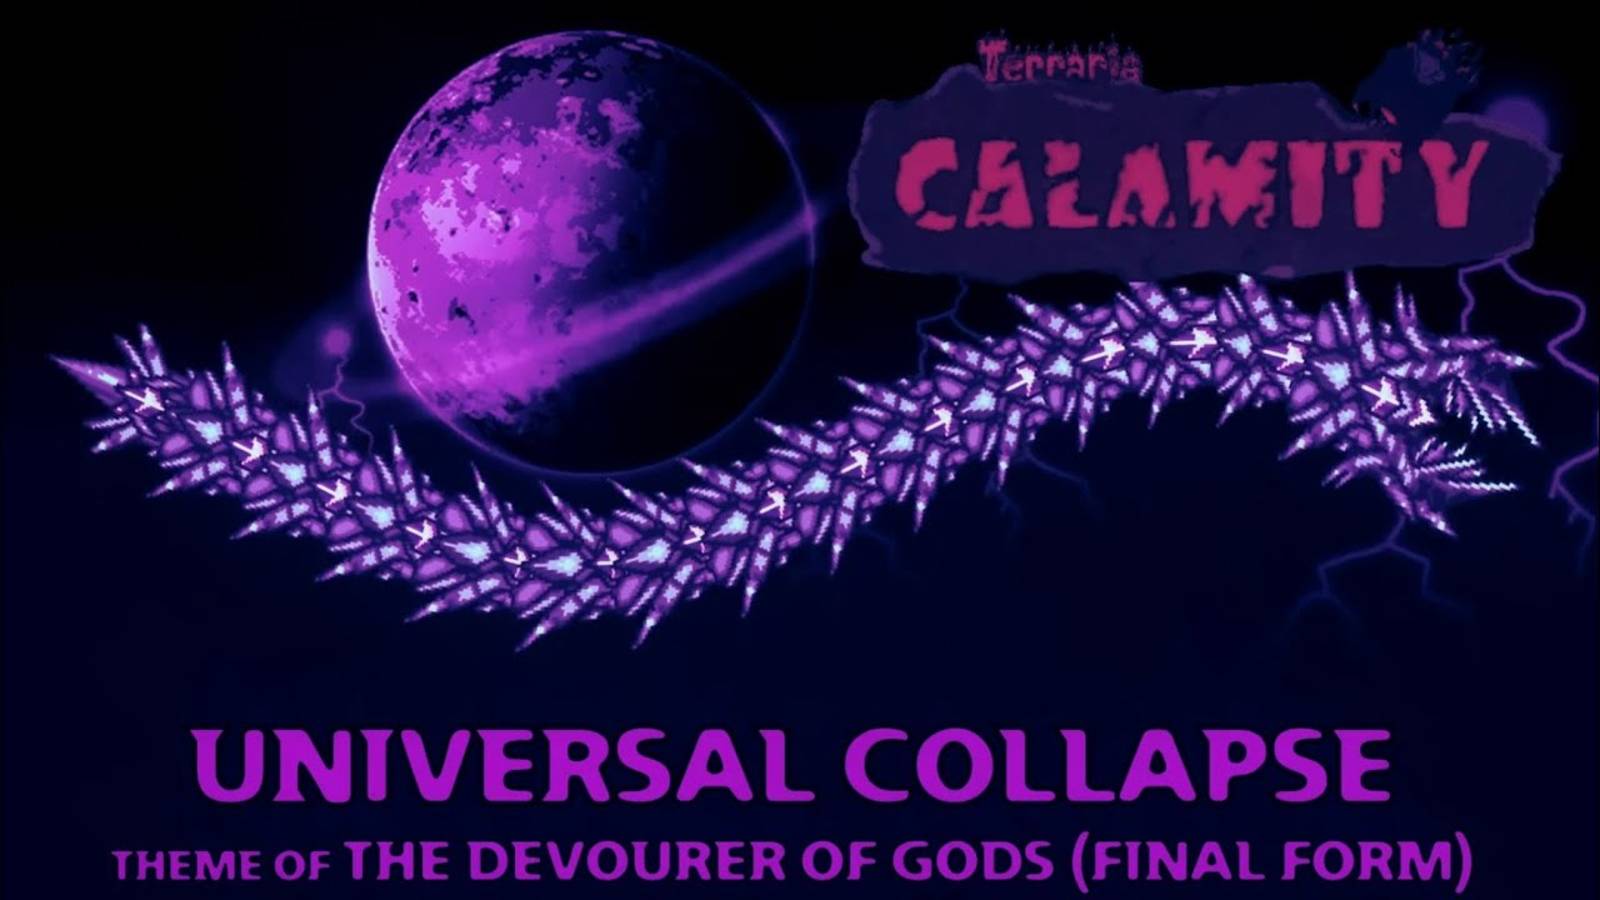 Universal collapse by DM DOKURO terraria calamity music